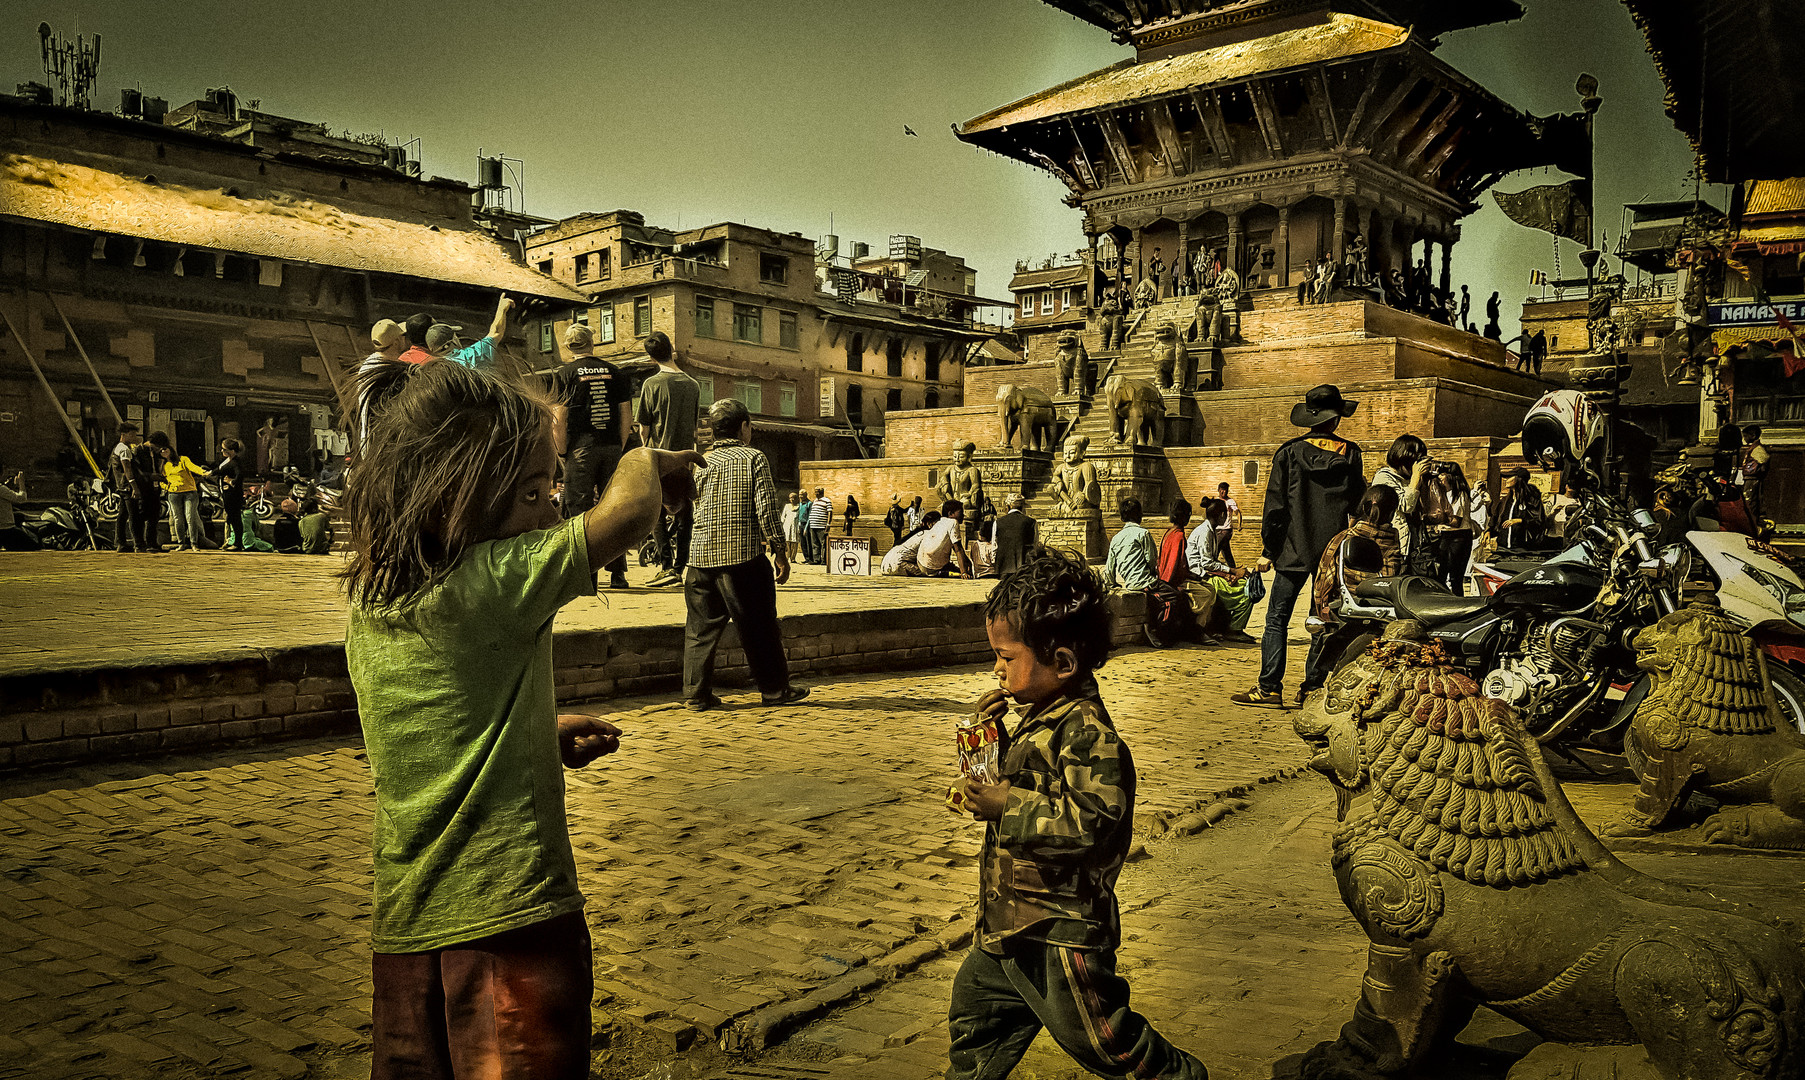 Bhaktapur - Nepal 2018